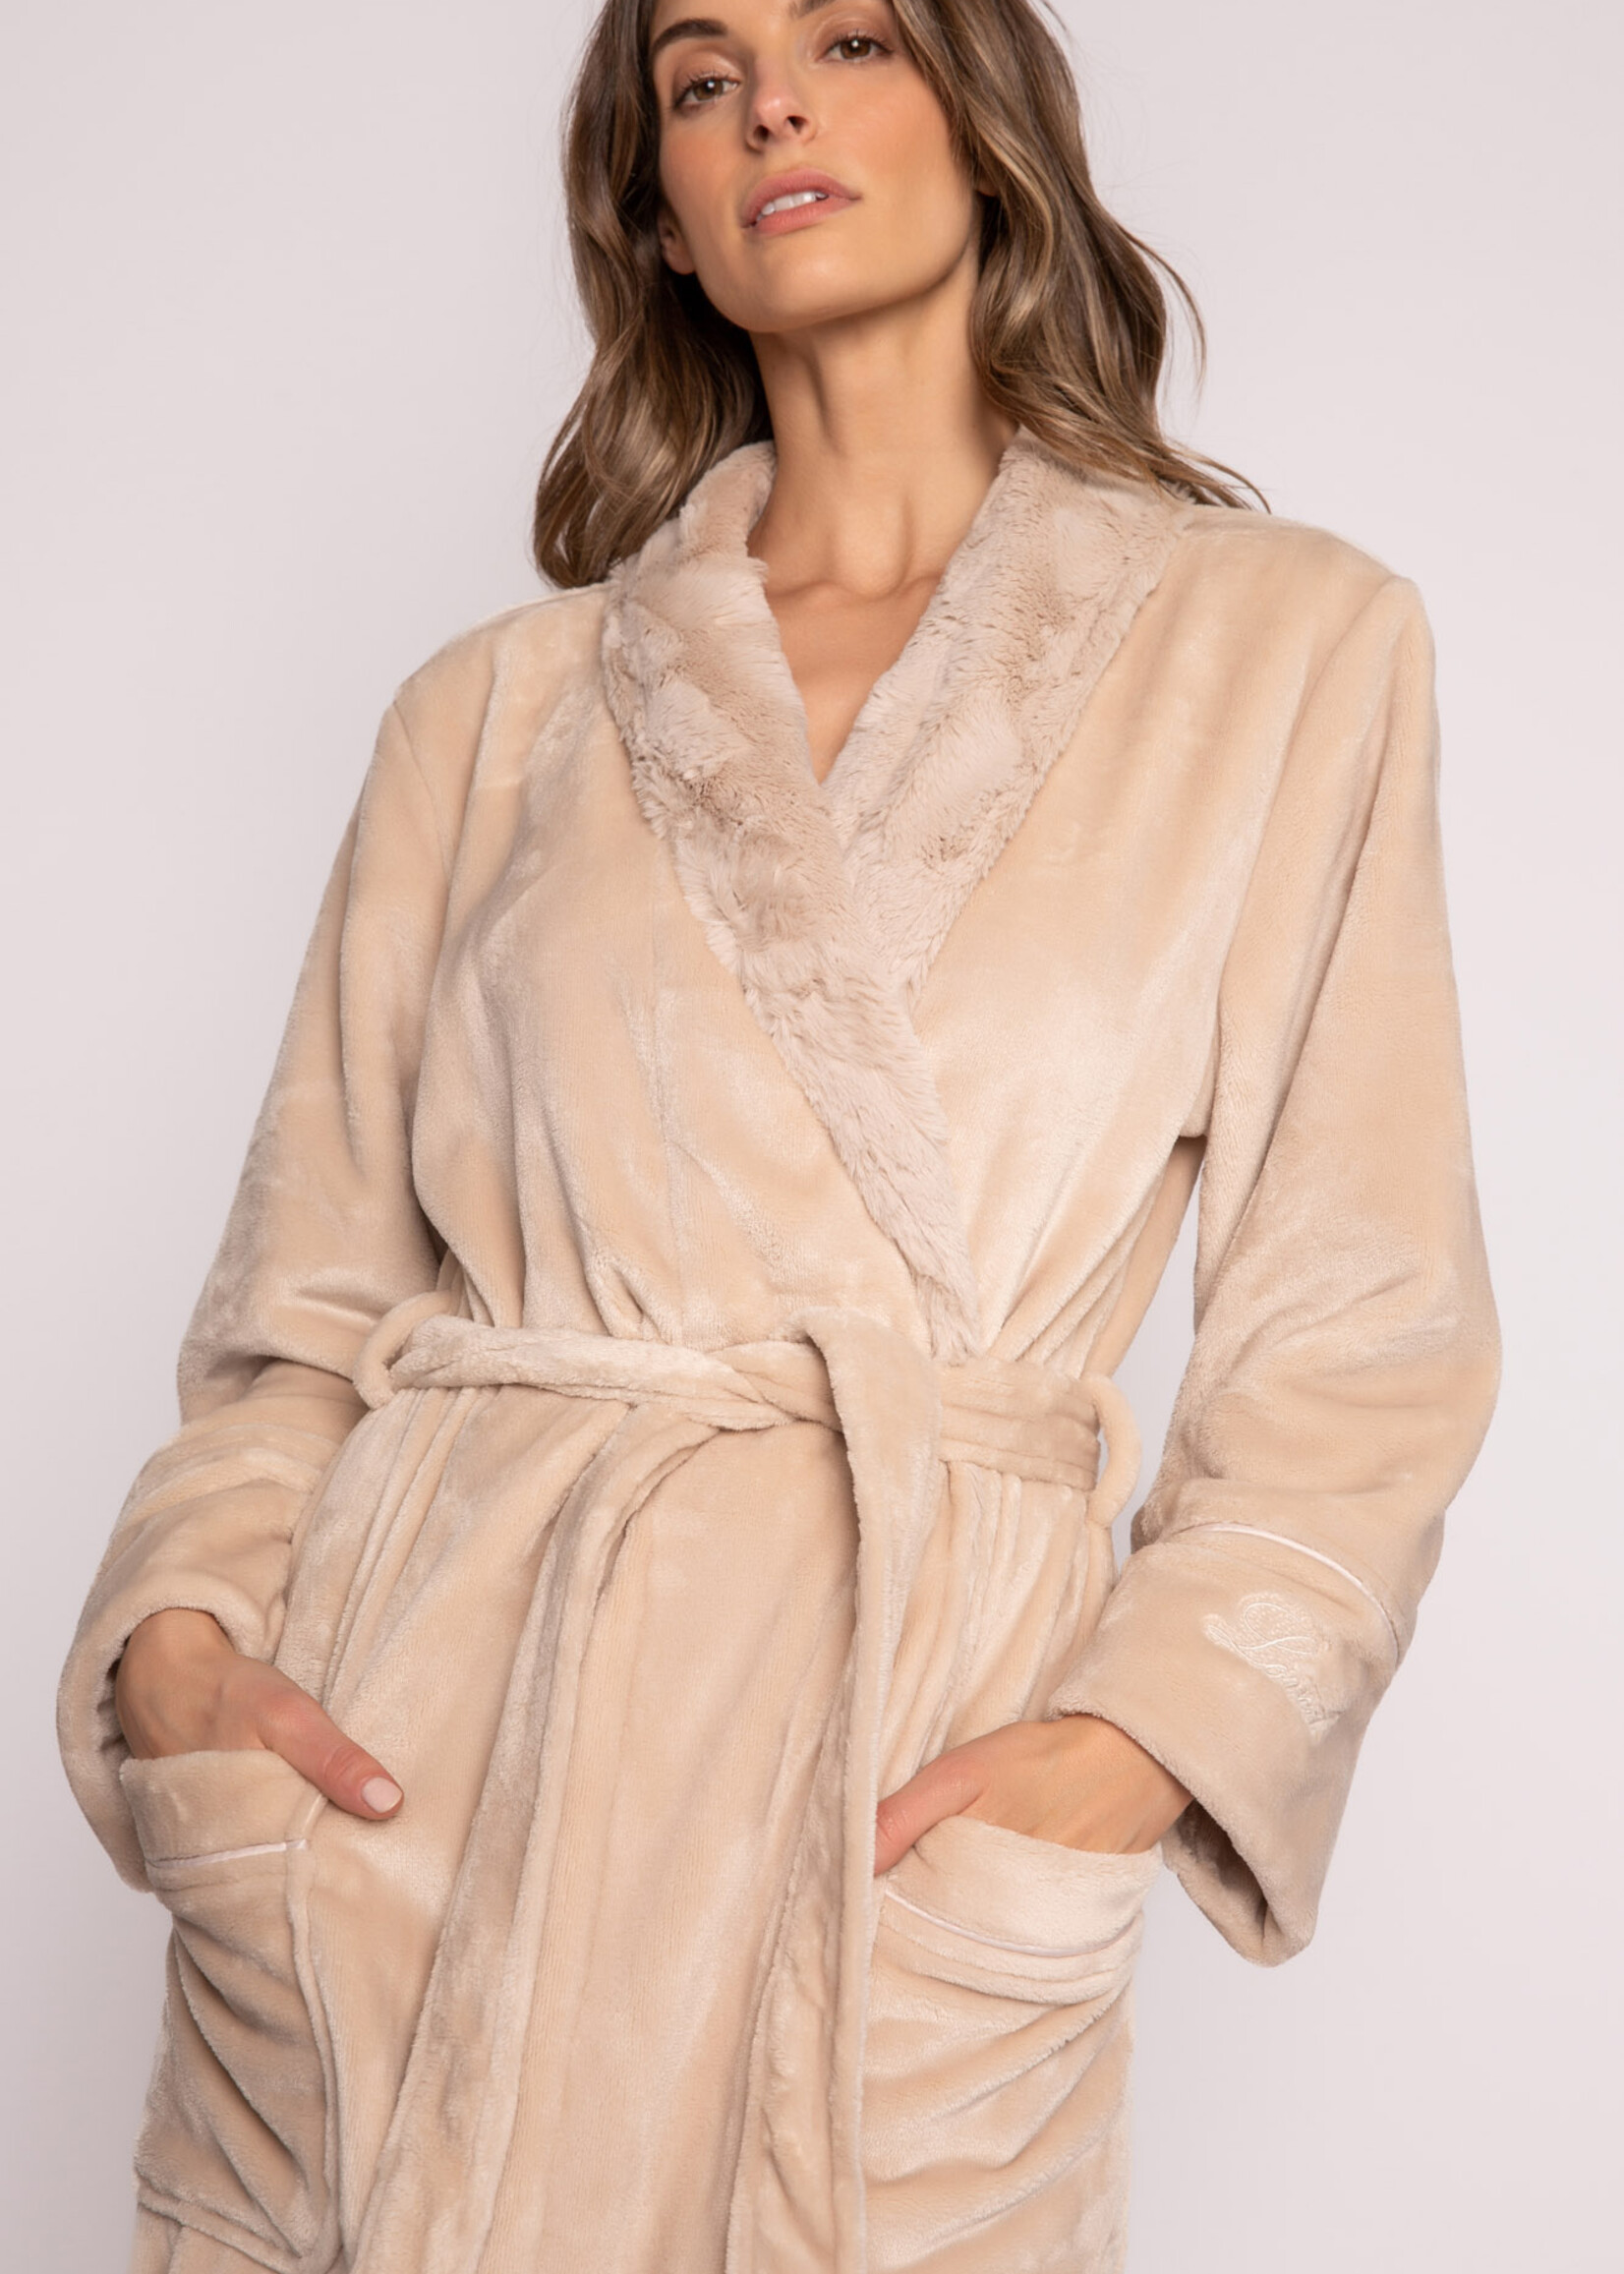 Women's Robes & Pajama Sale